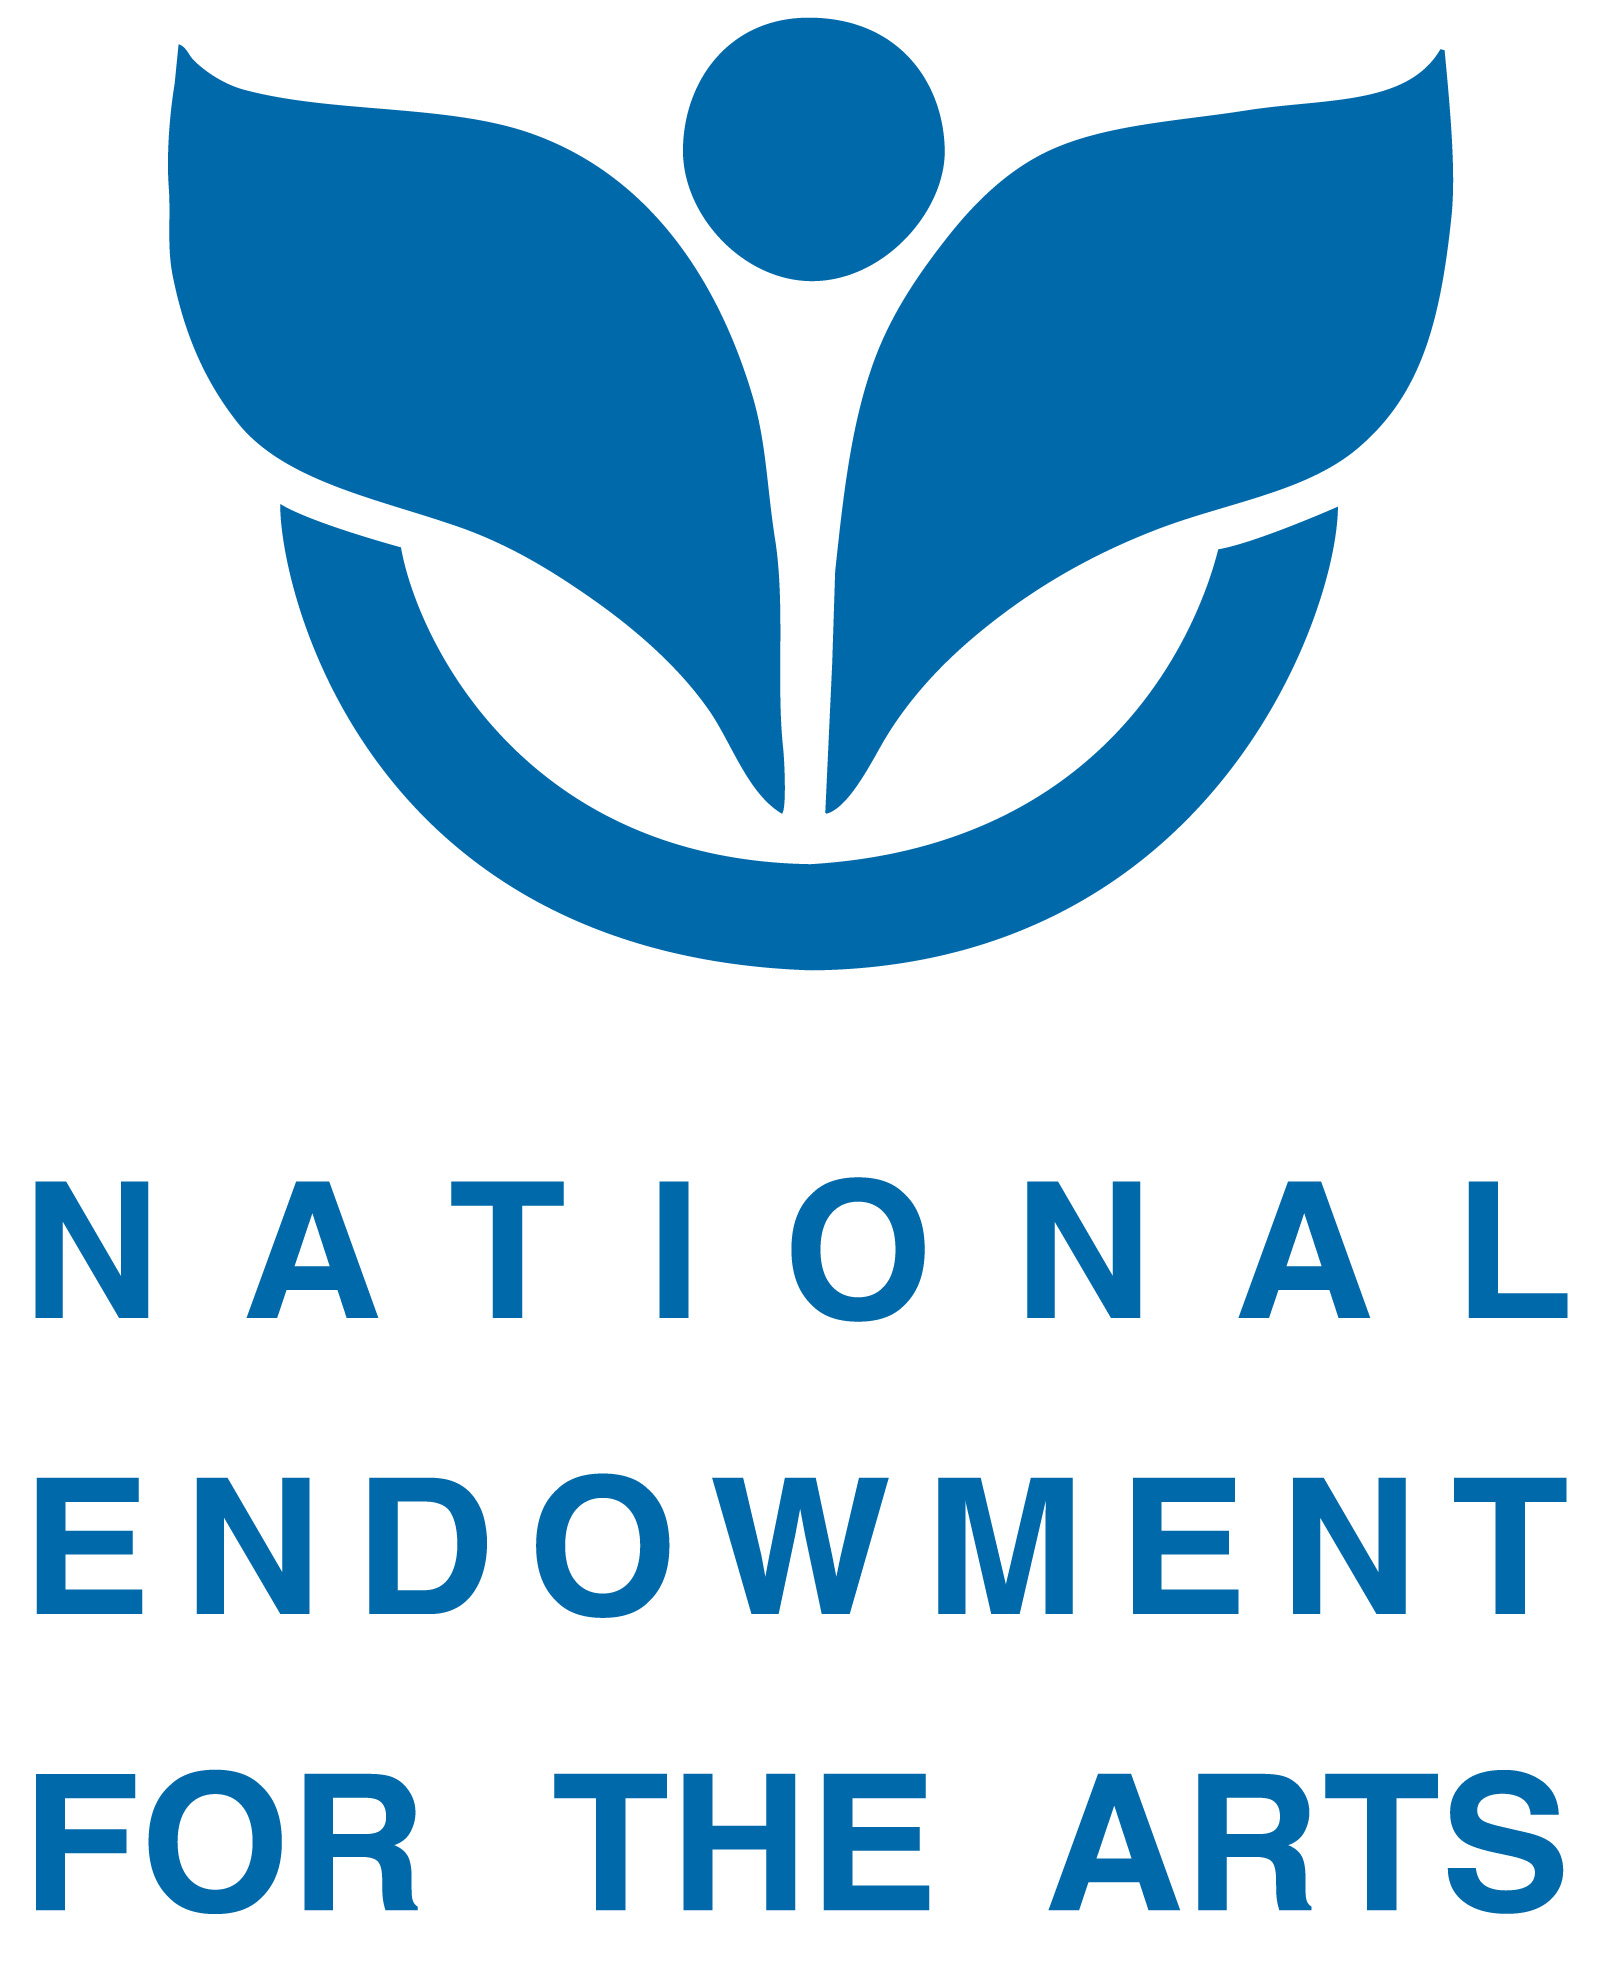 NATIONAL ENDOWMENT FOR THE ARTS-1.jpg